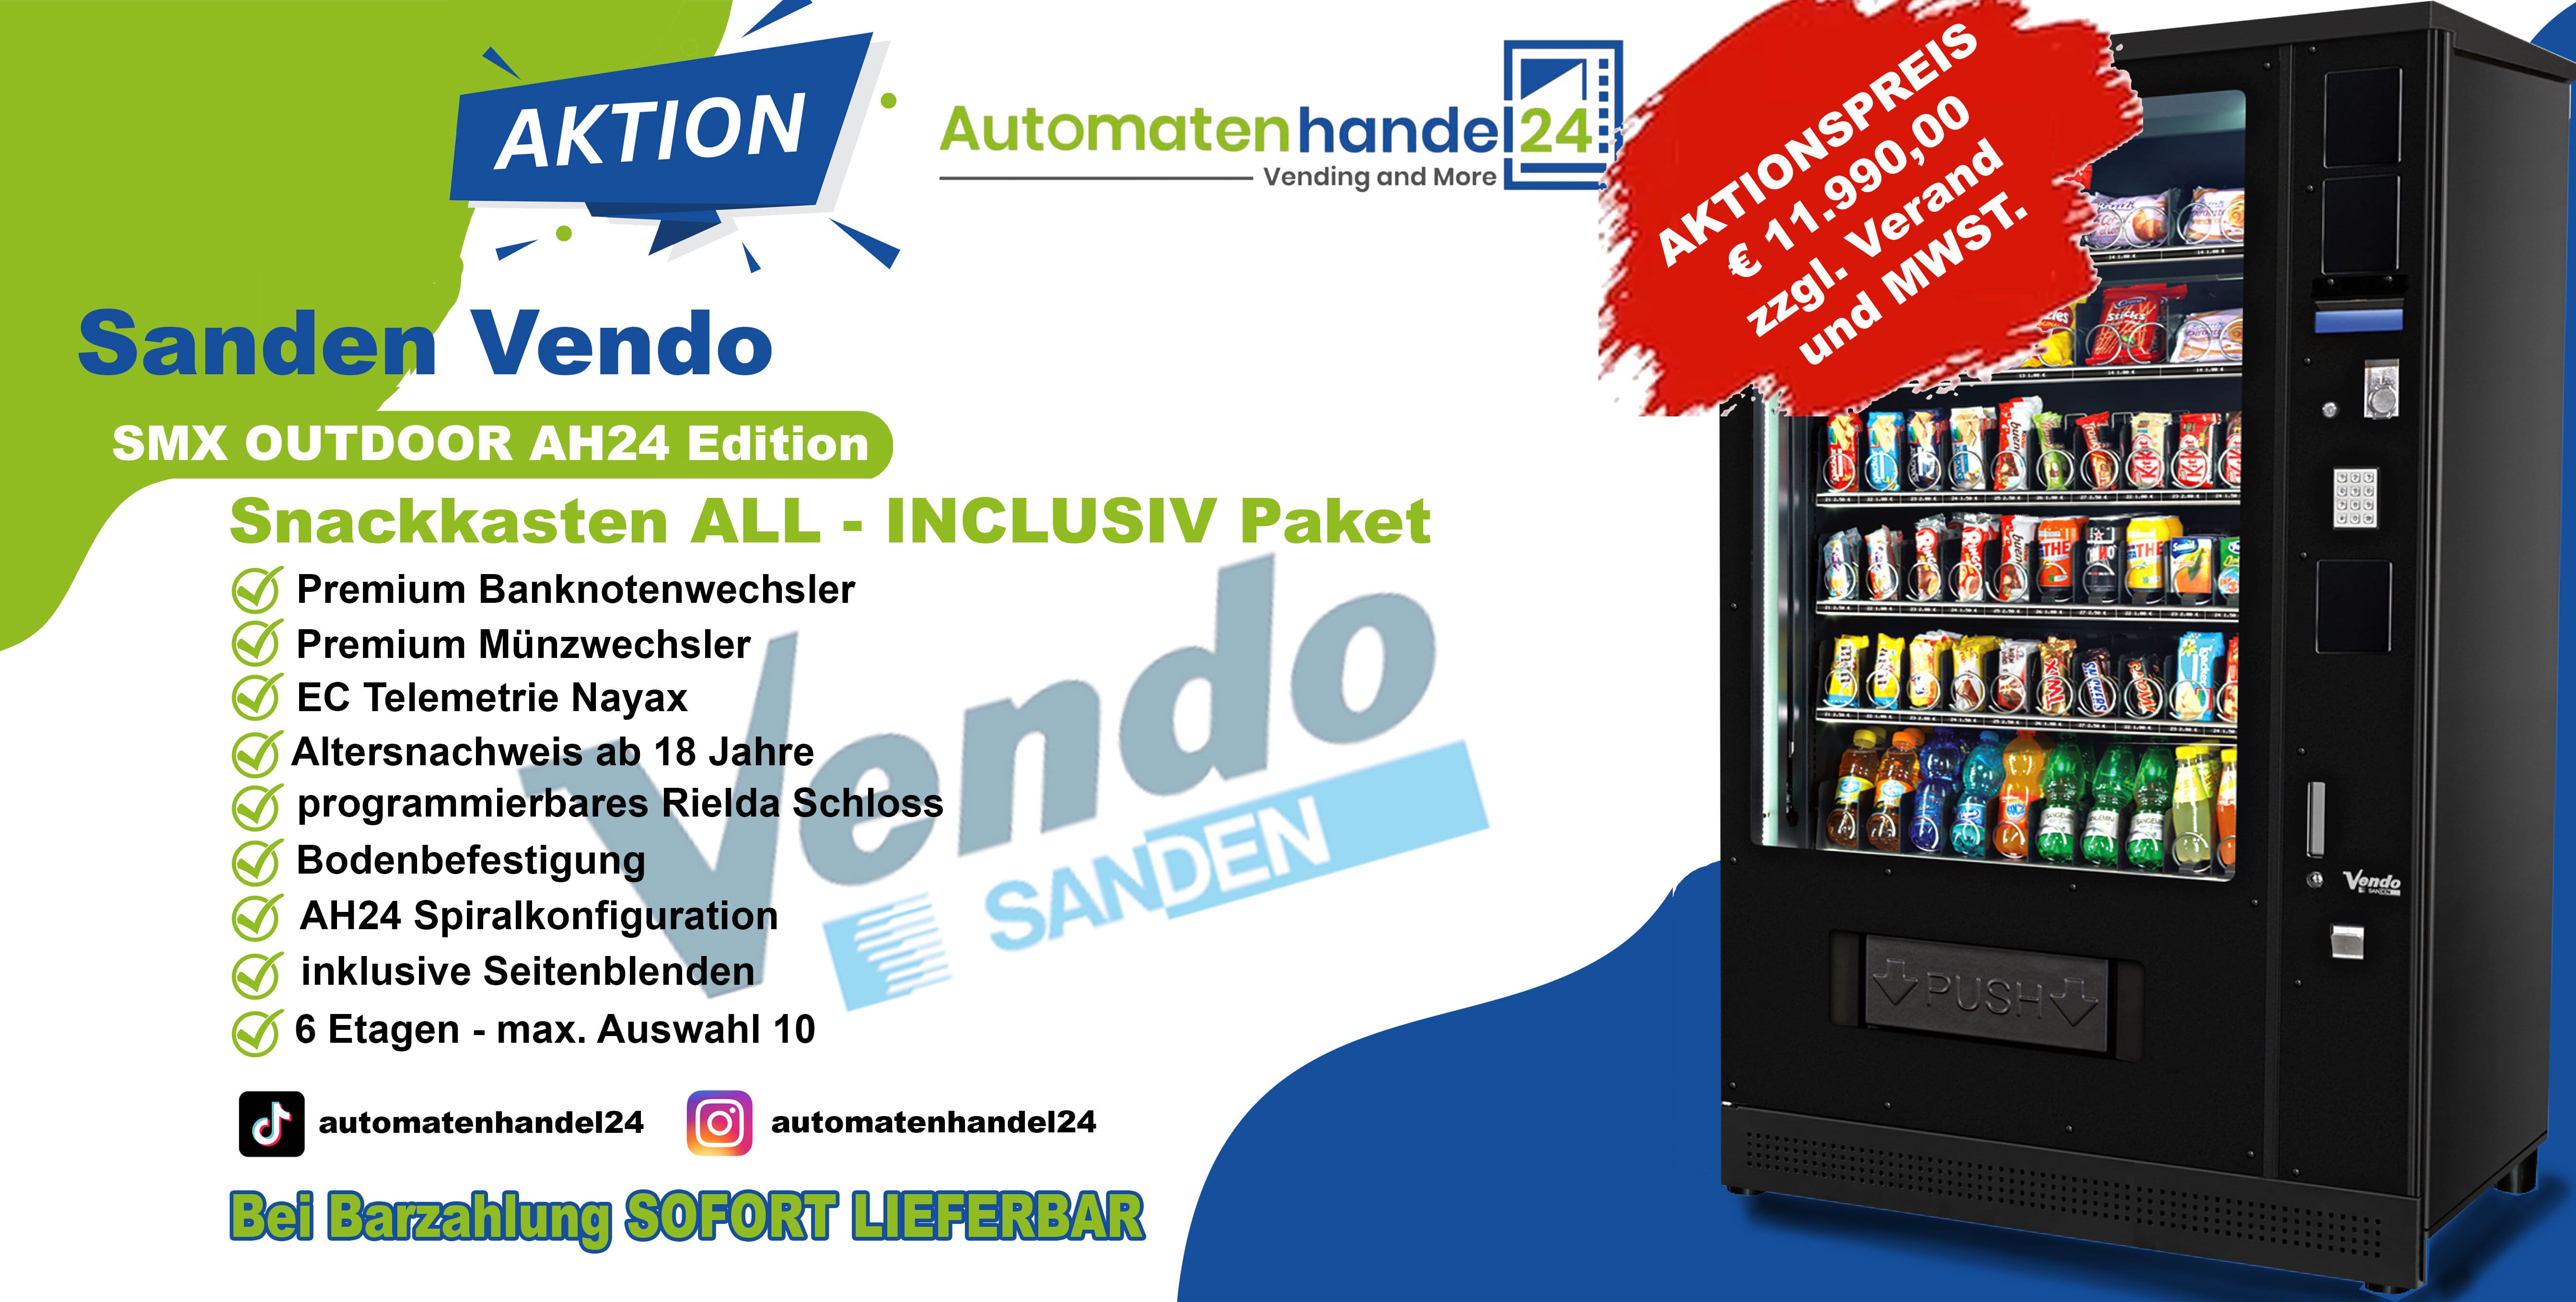 Flyer SMX Outdoor AH24 Edition, Warenautomat, Verkaufsautomat, Automat, Sanden Vendo